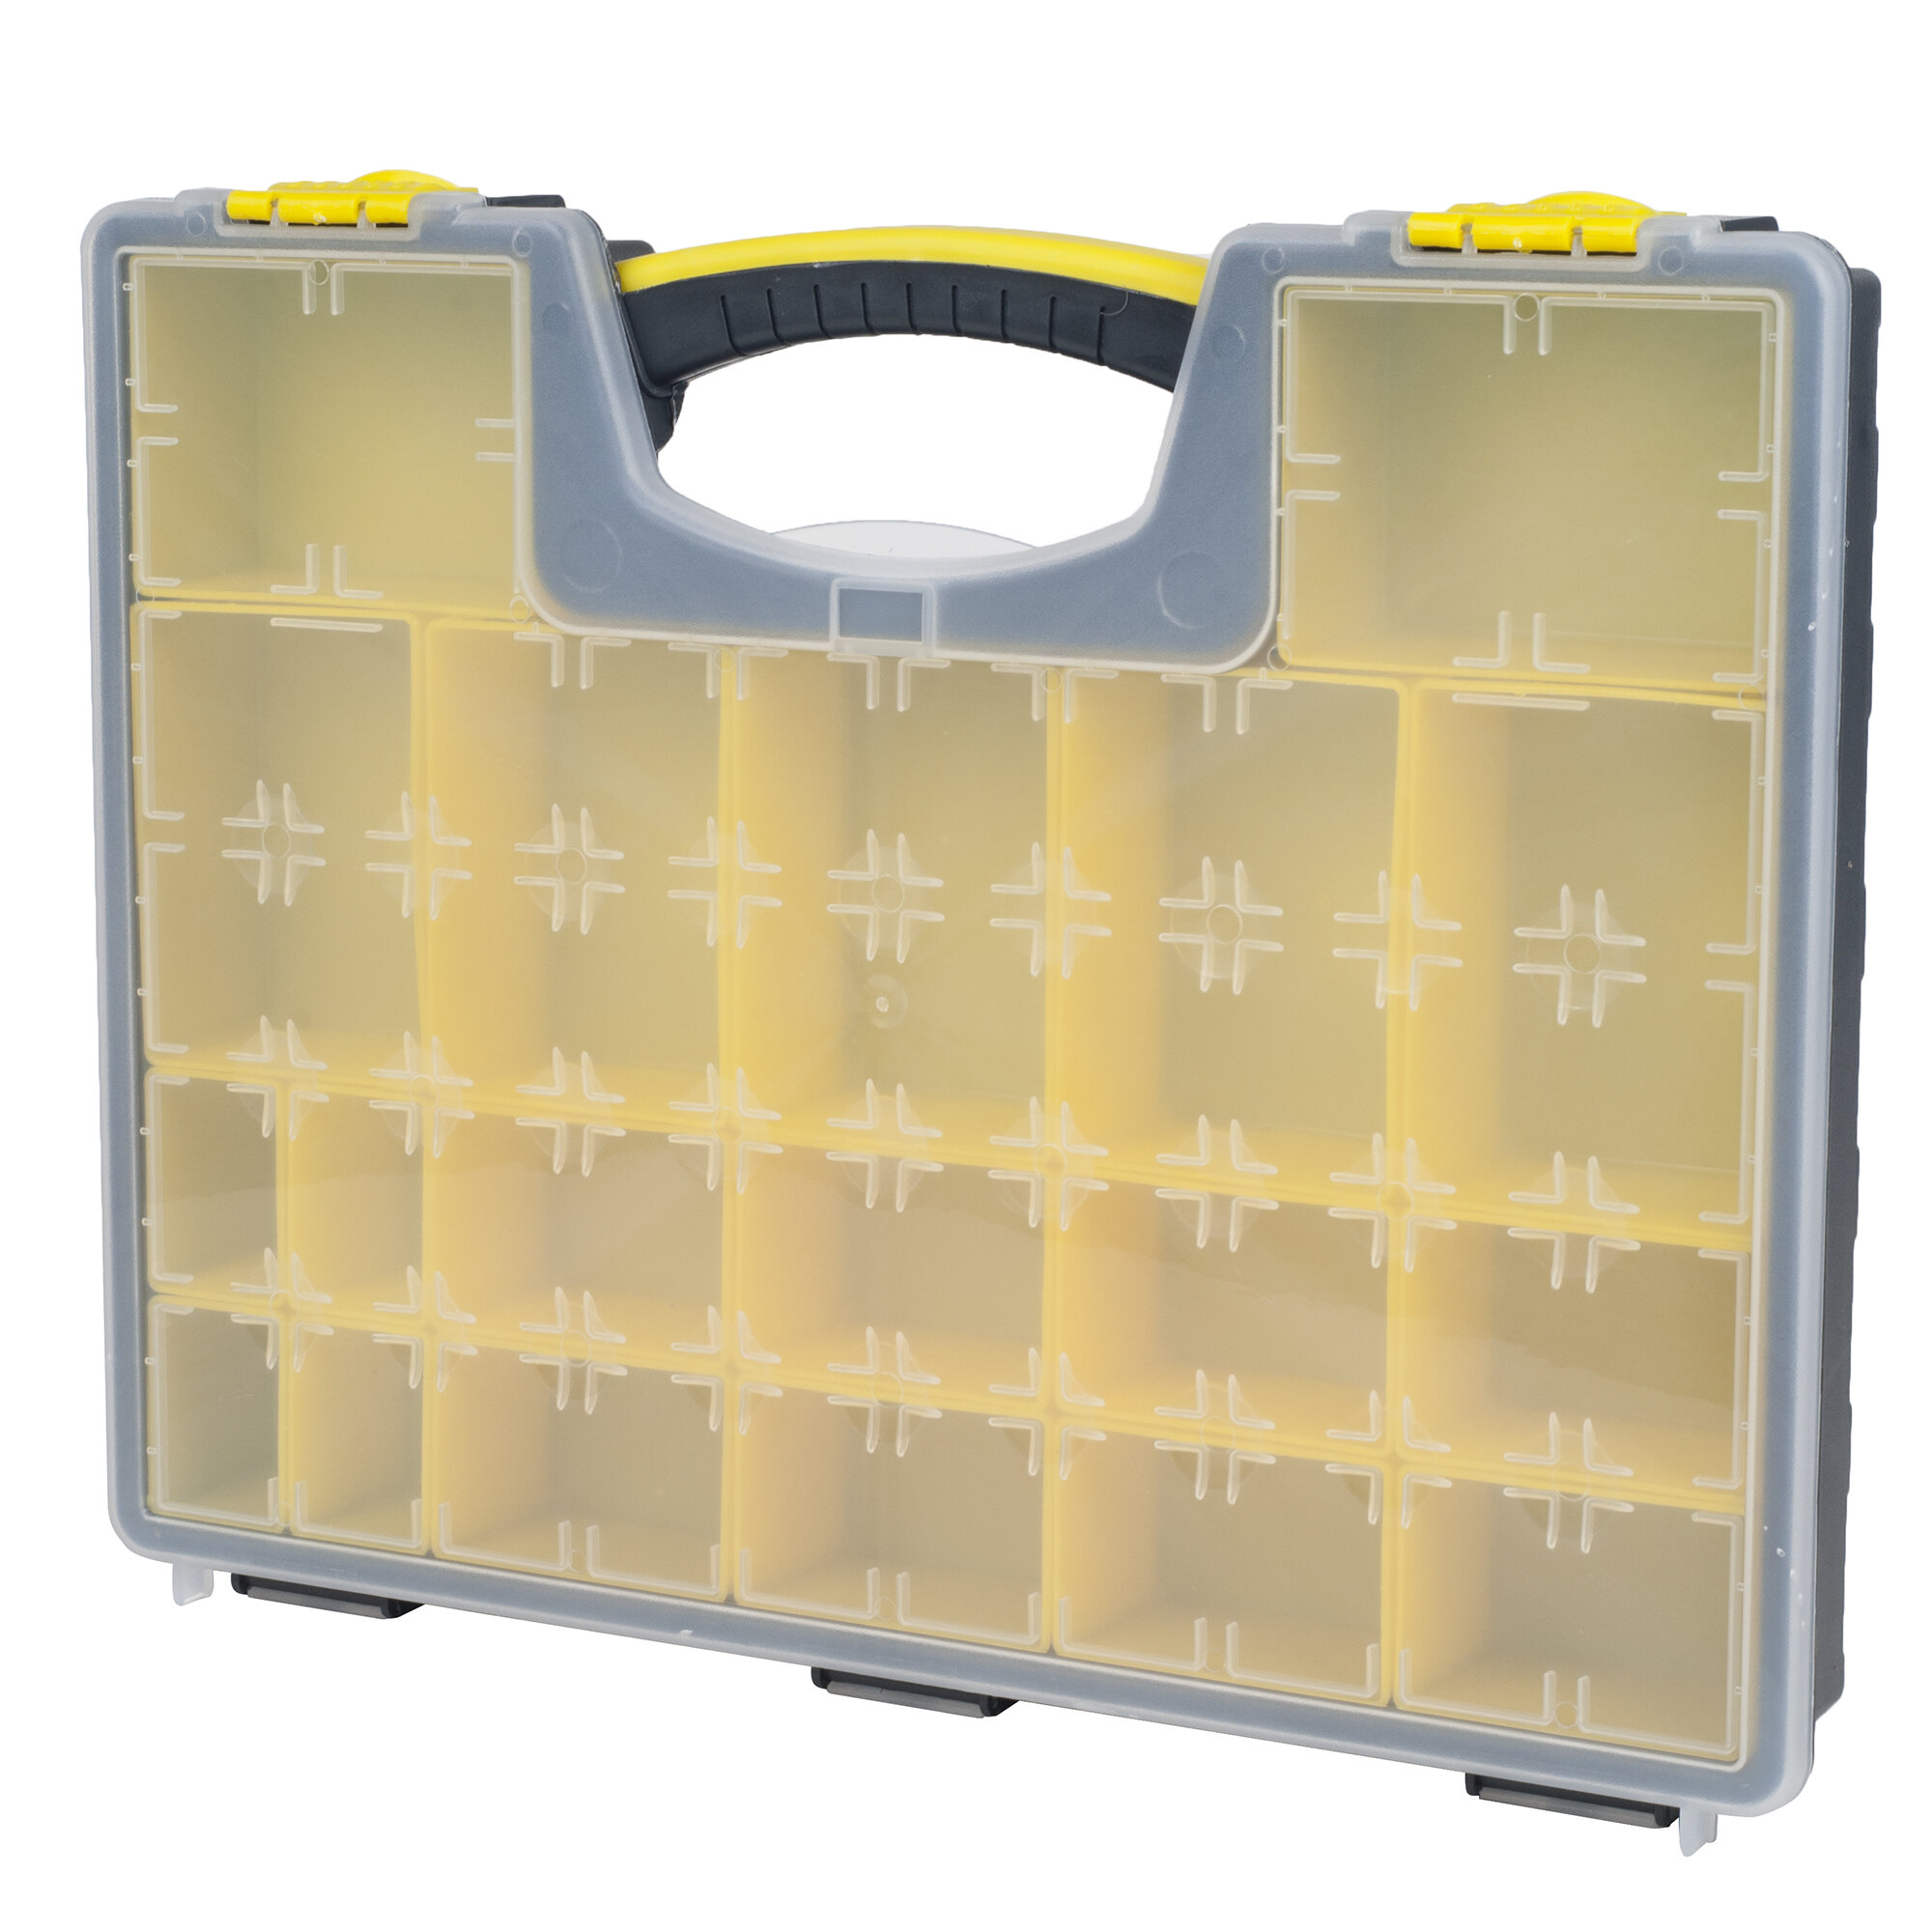 Stalwart Storage Organizer Tool Box - Clear Top Plastic Organizers